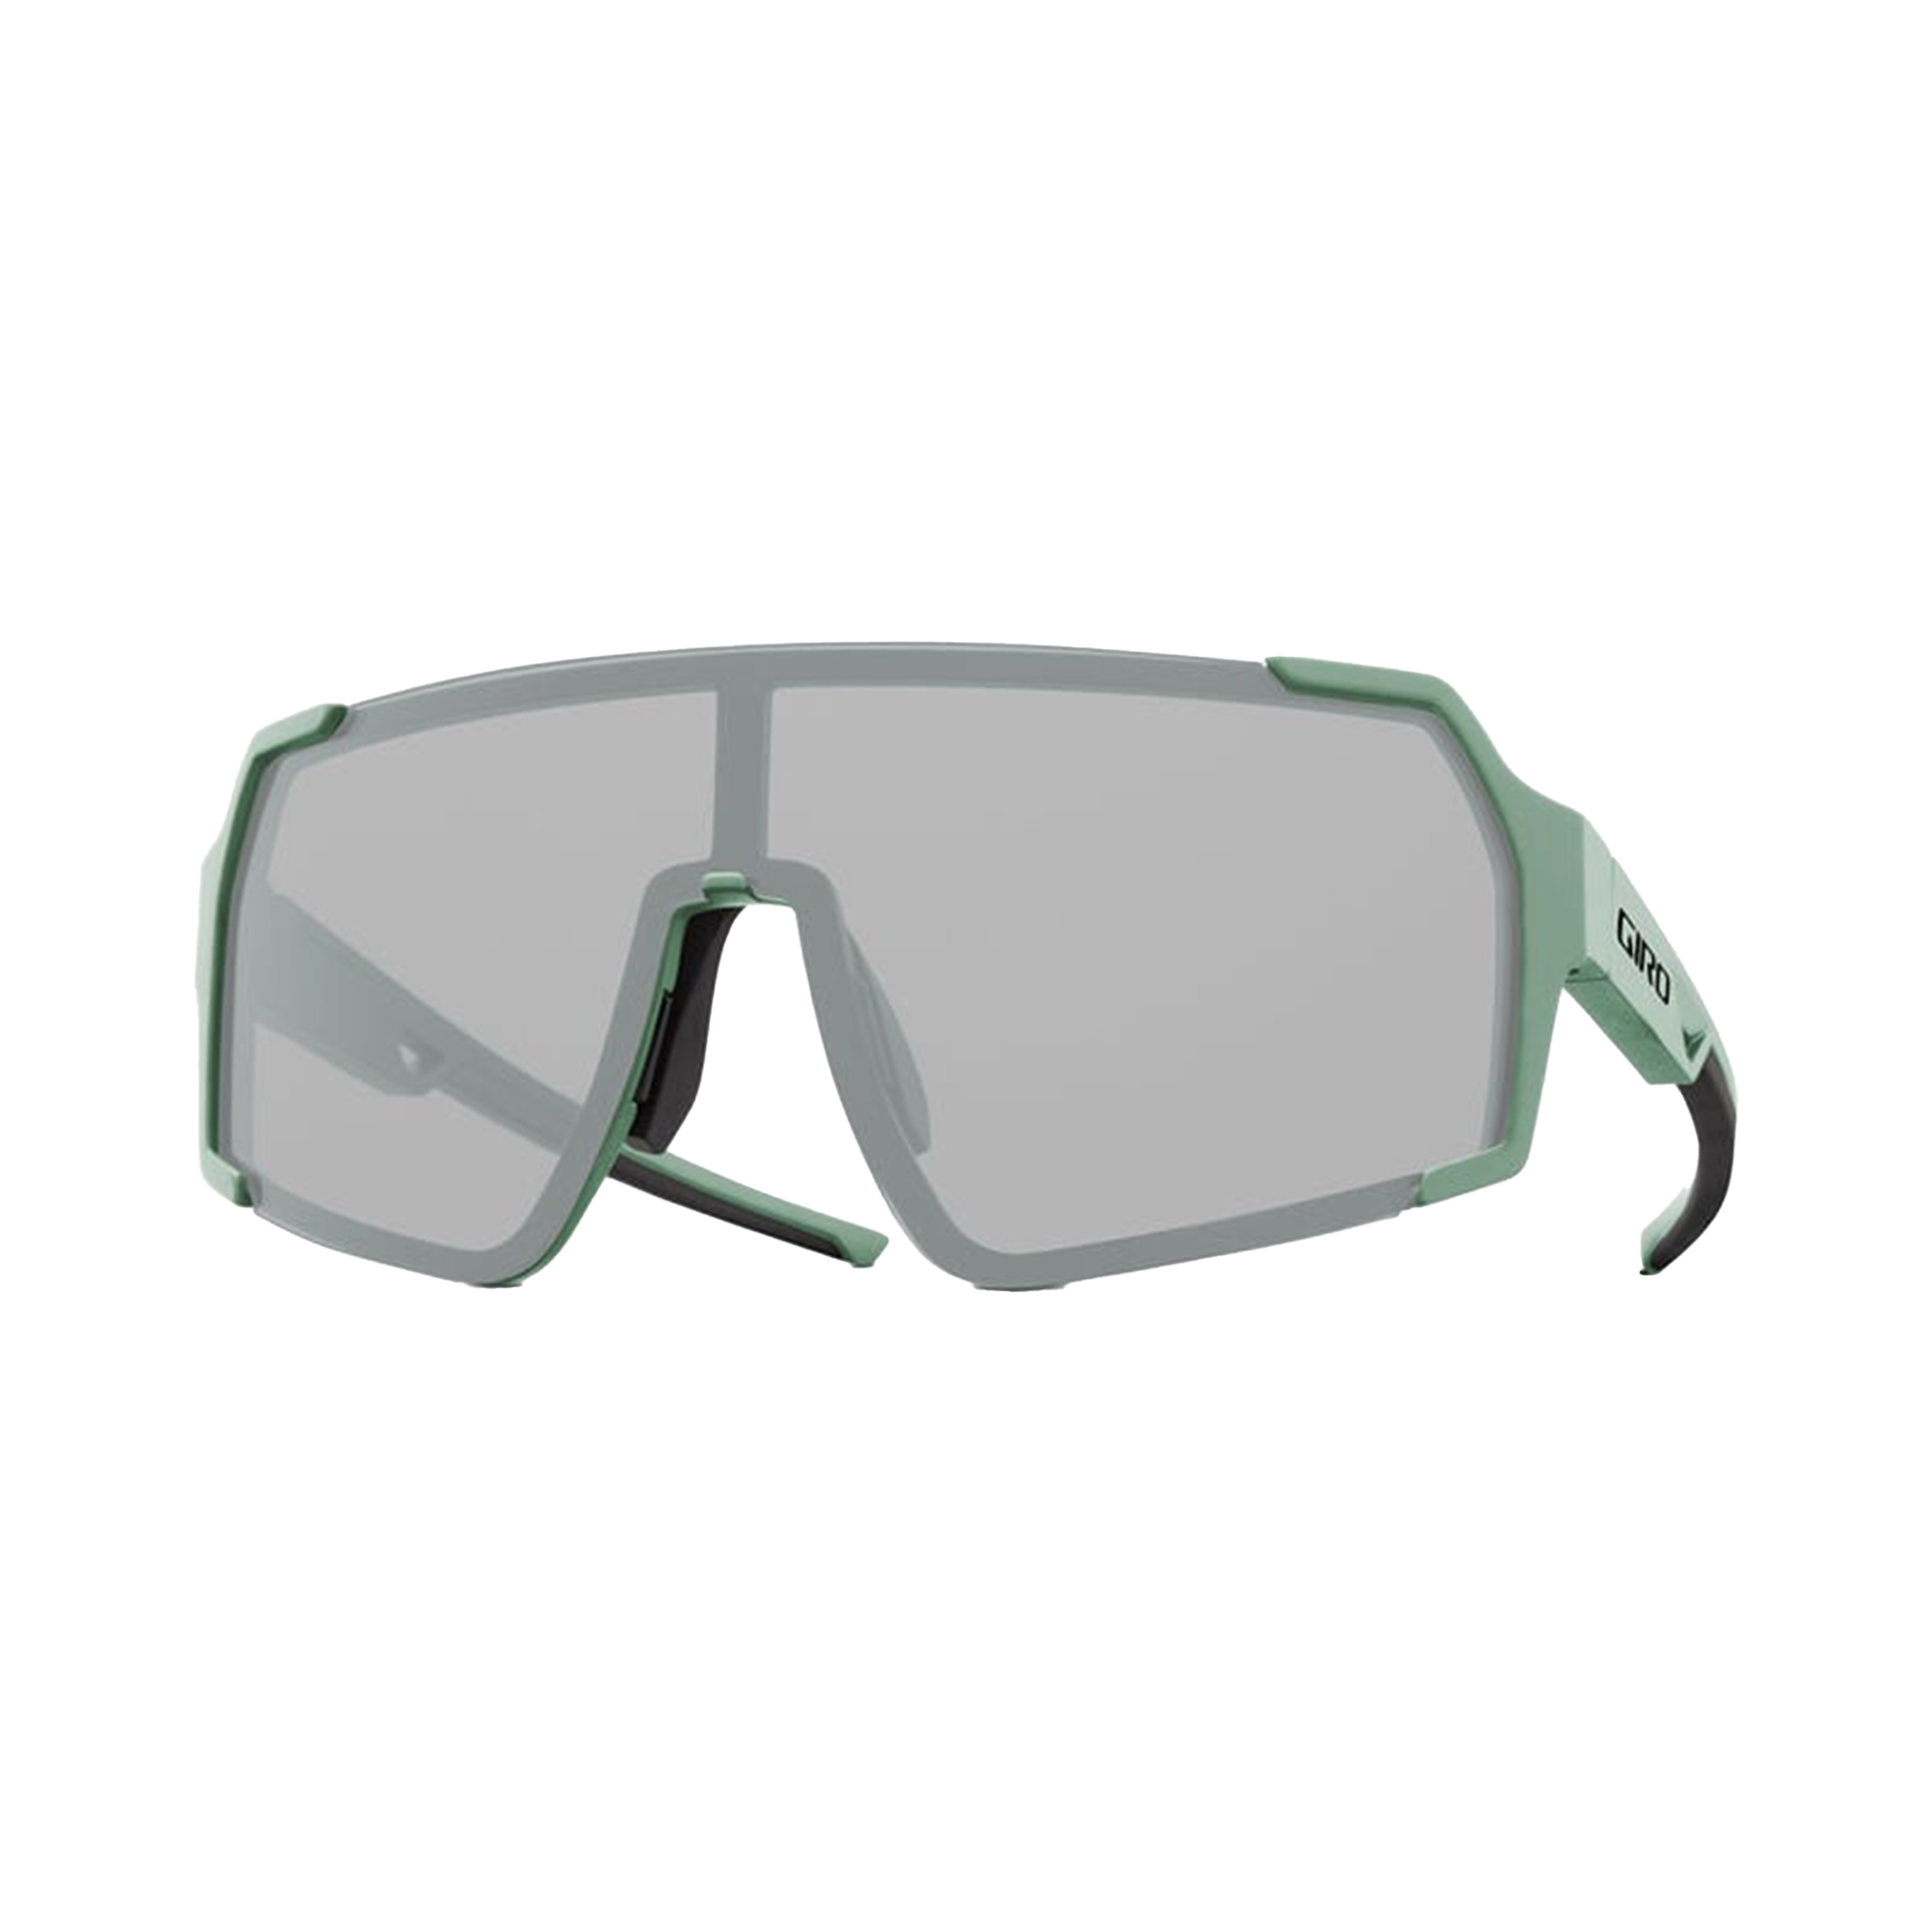 Giro Loot Sunglasses Matte Surf Green VIVID Onyx Sunglasses